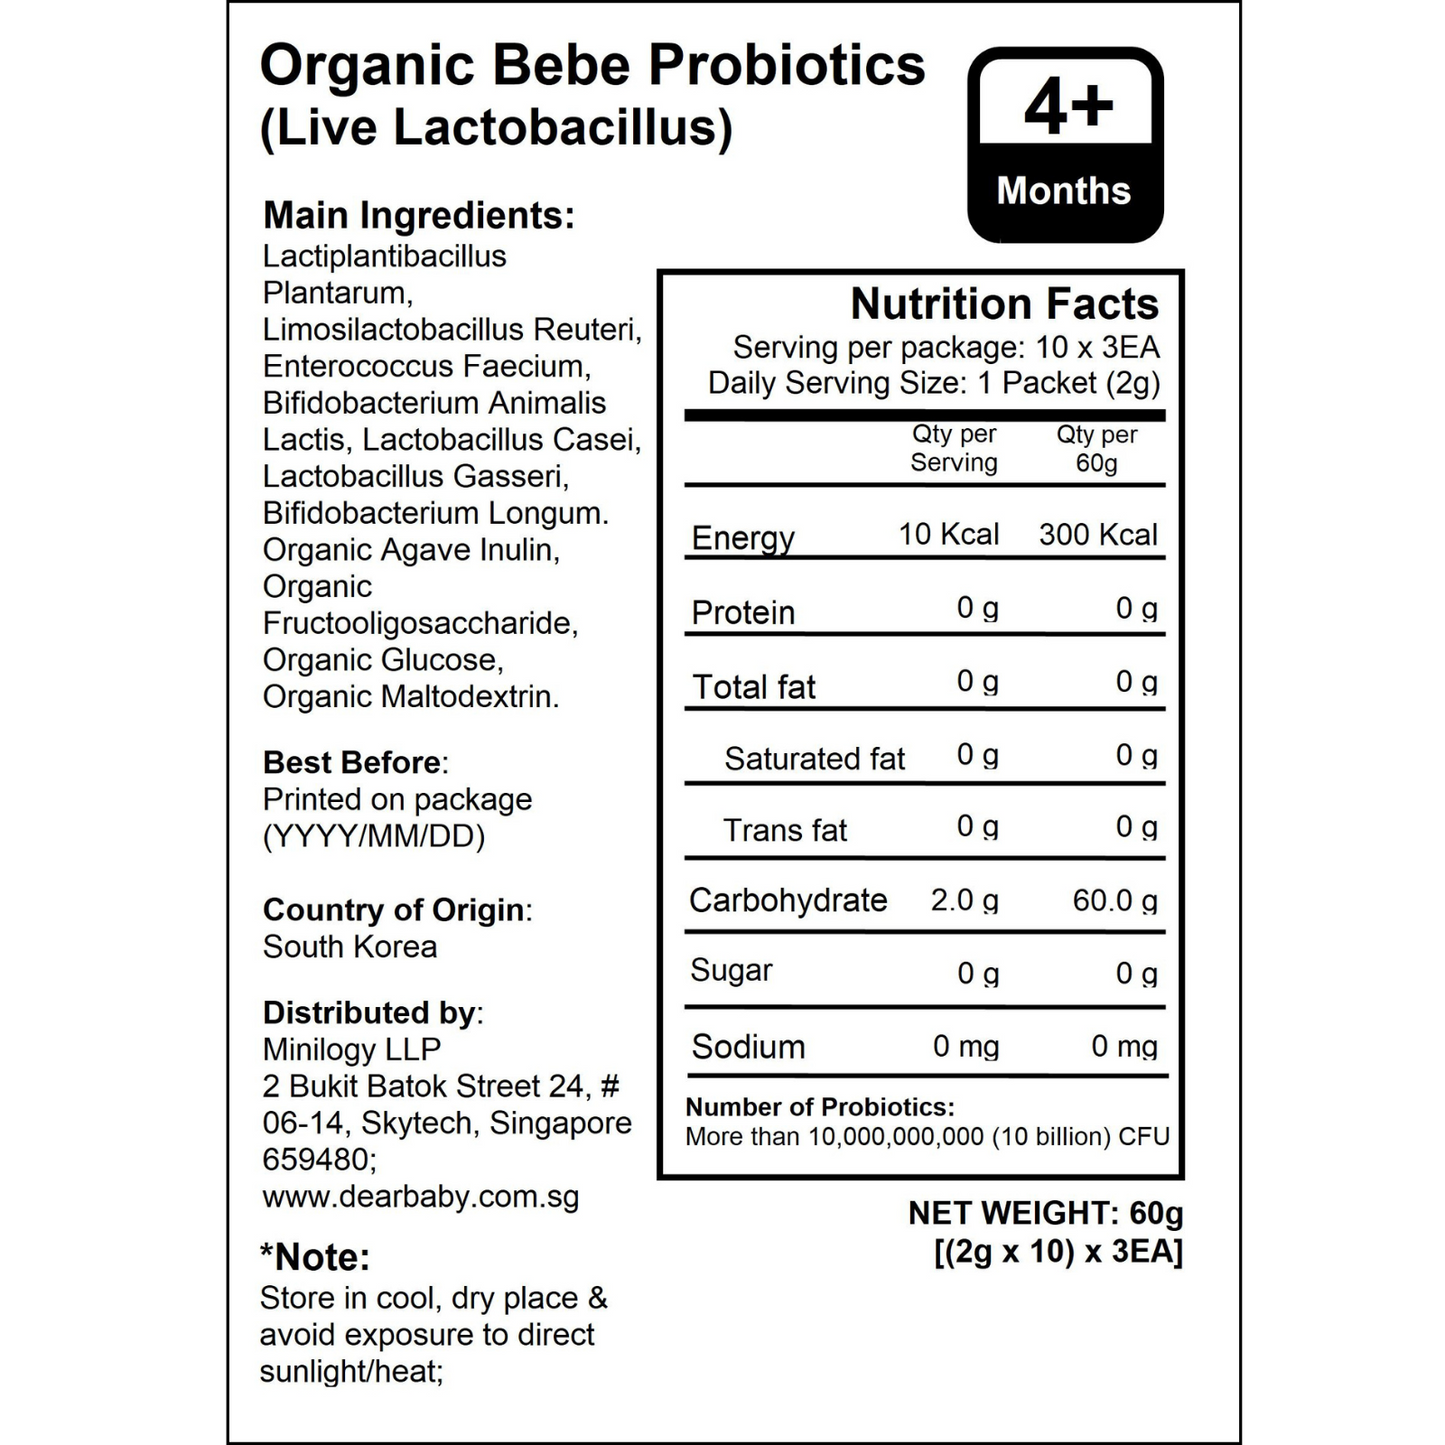 BeBecook - Organic Bebe Probiotics